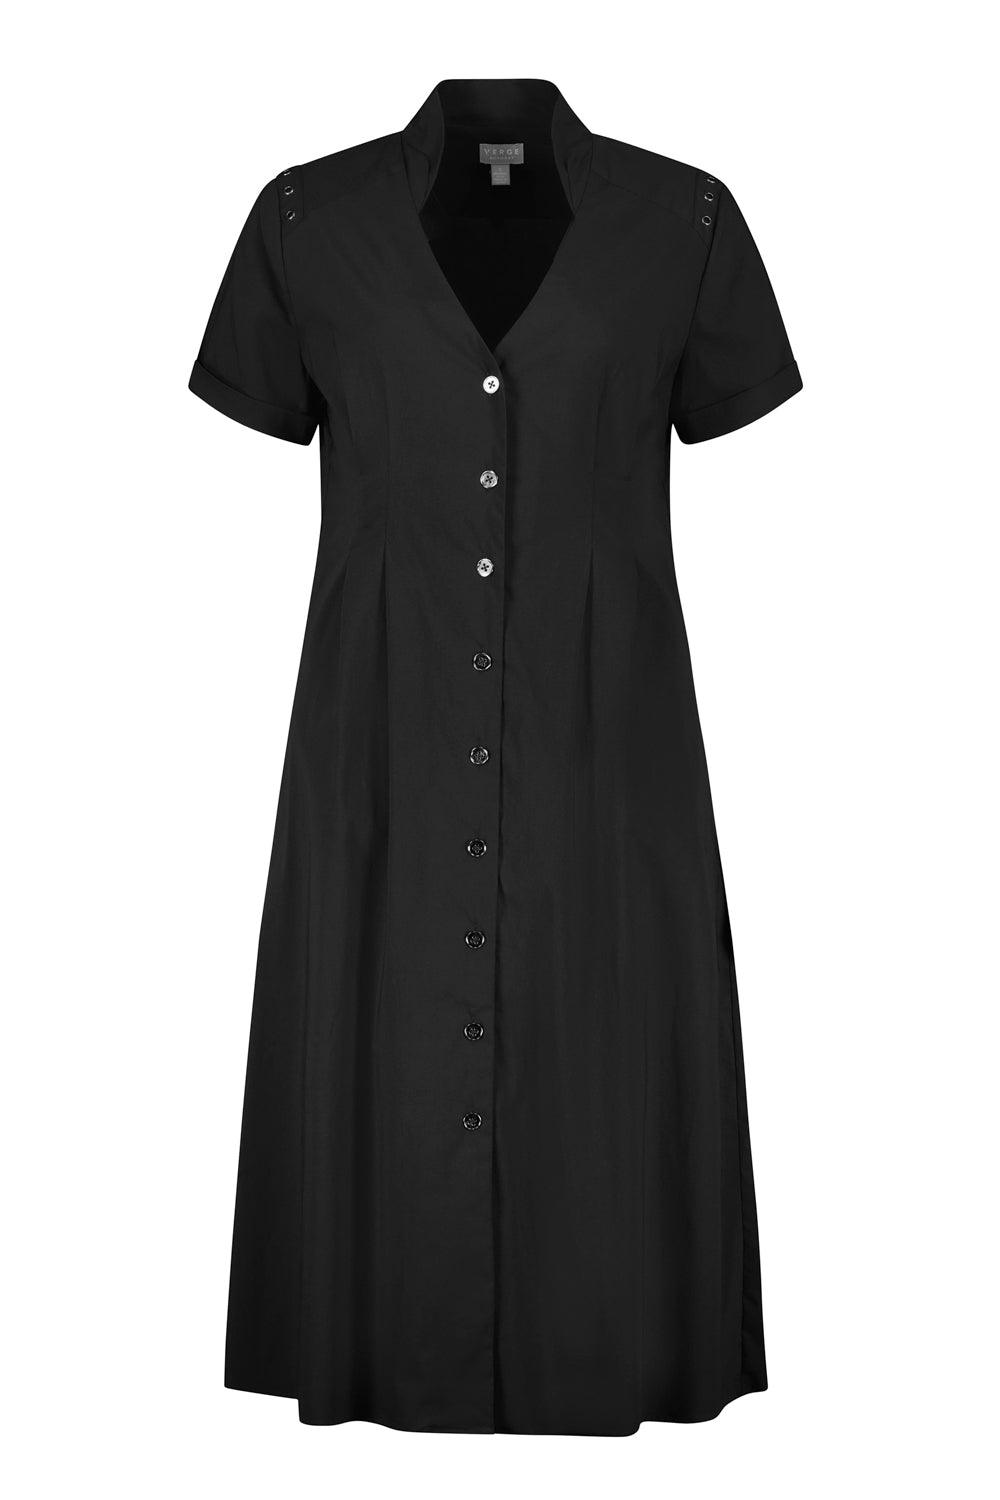 Acrobat Momentum Dress - Black - Dress VERGE